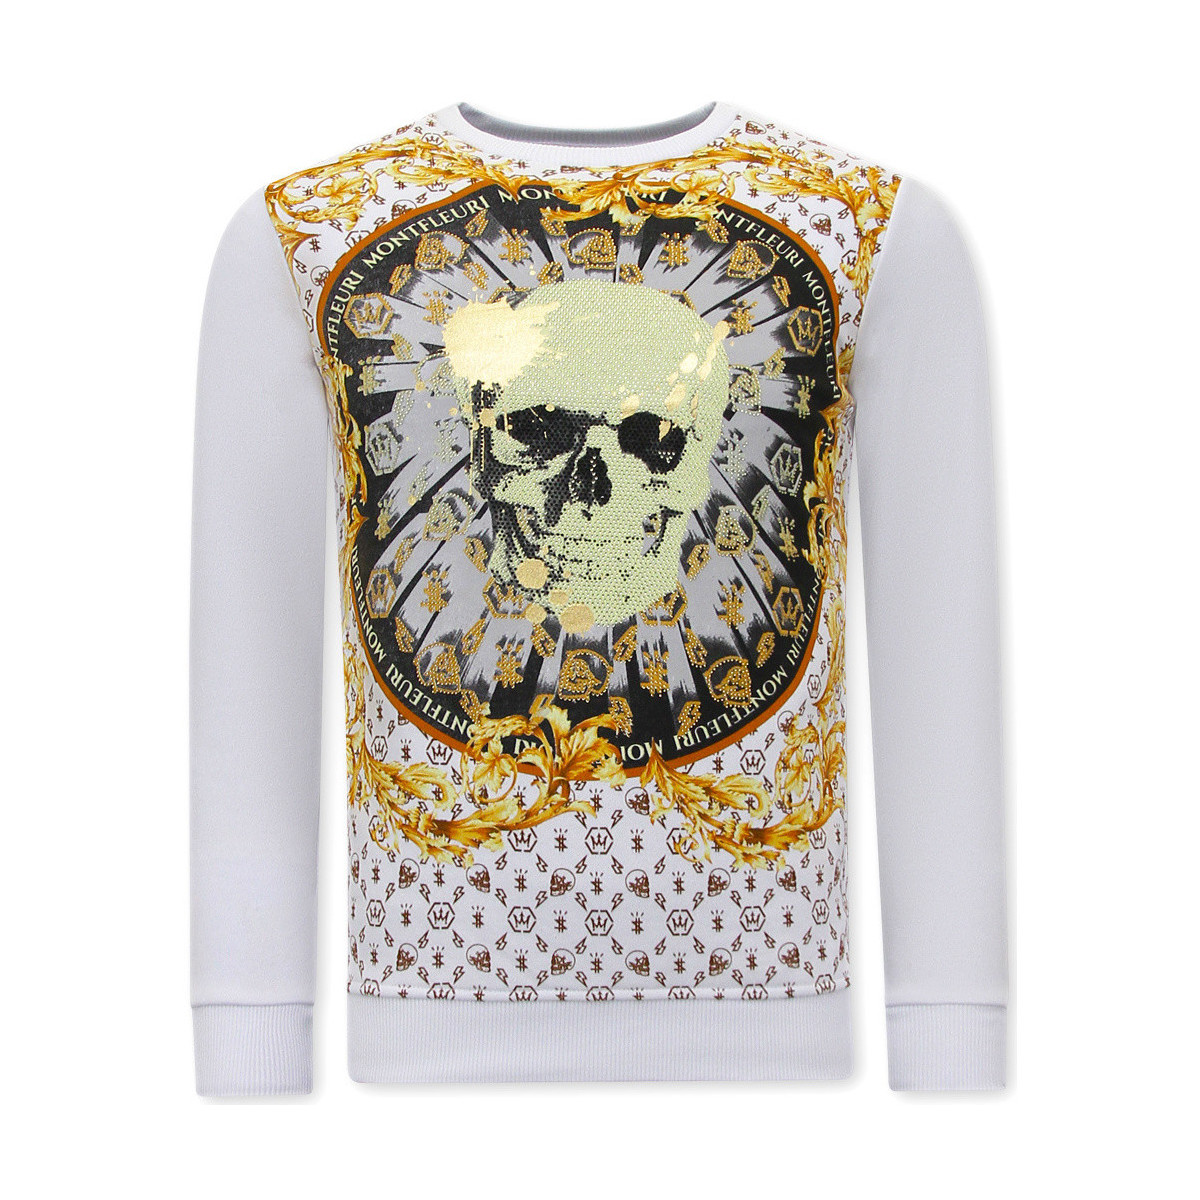 Textiel Heren Sweaters / Sweatshirts Tony Backer Print Skull Strass Wit